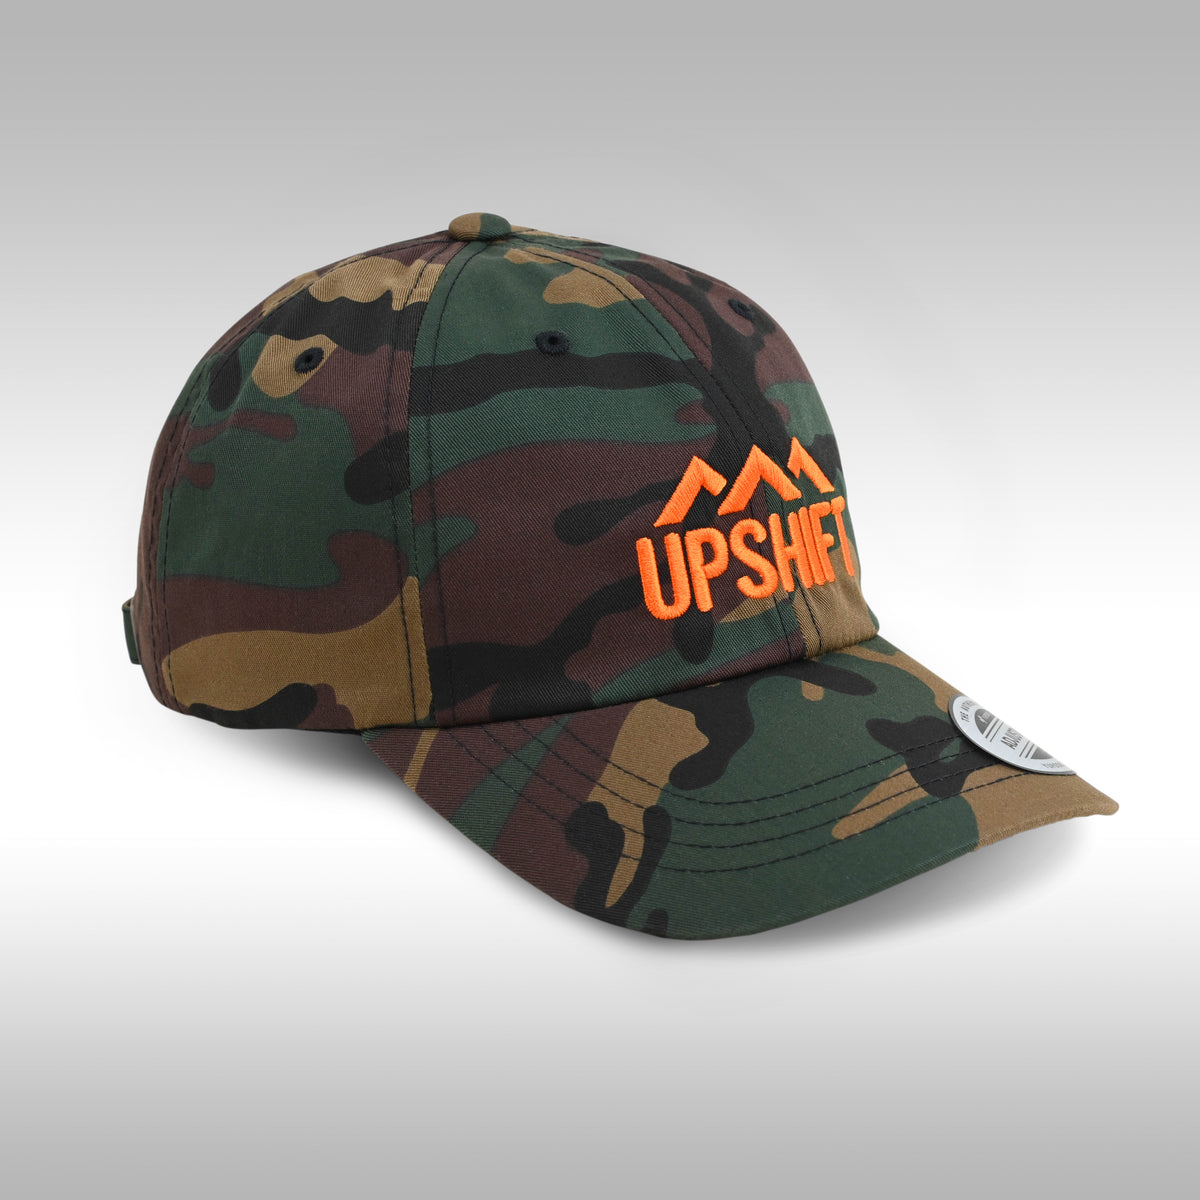 UPSHIFT DAD HAT - THE MARTIN CAP